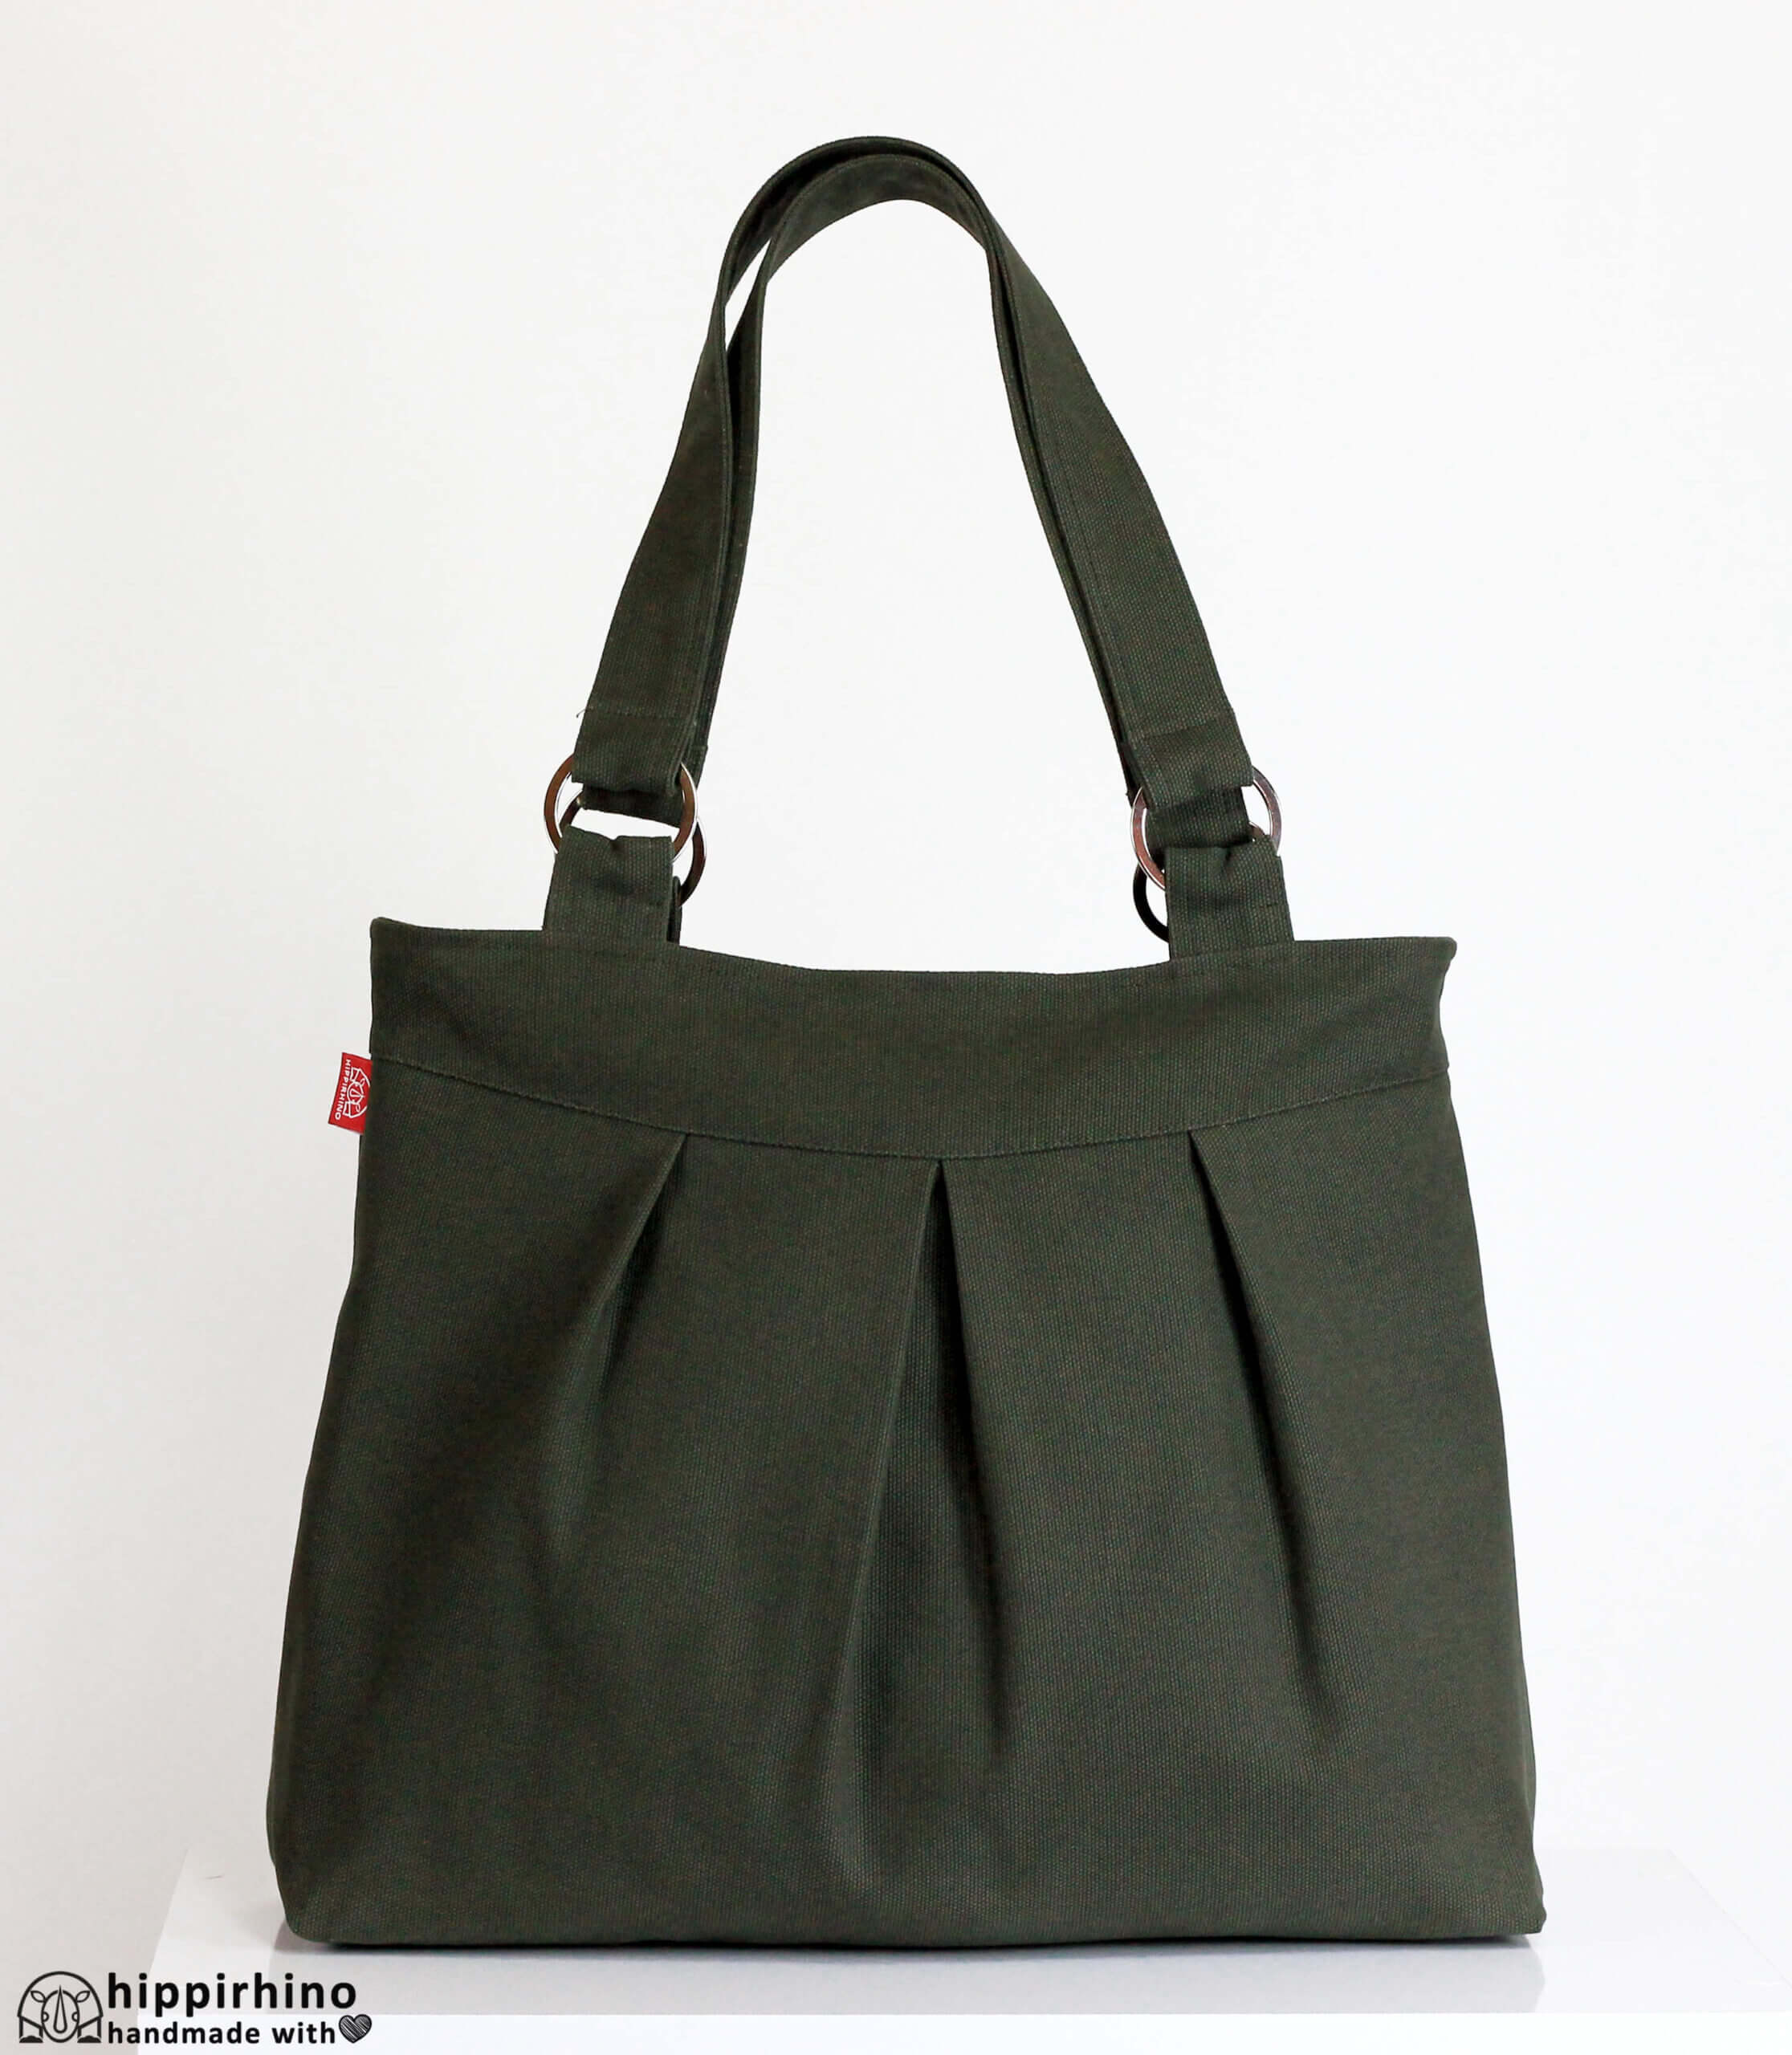 Red Canvas Shoulder Bag Medium Size Zipper Closure Hobo Bag Everyday ...